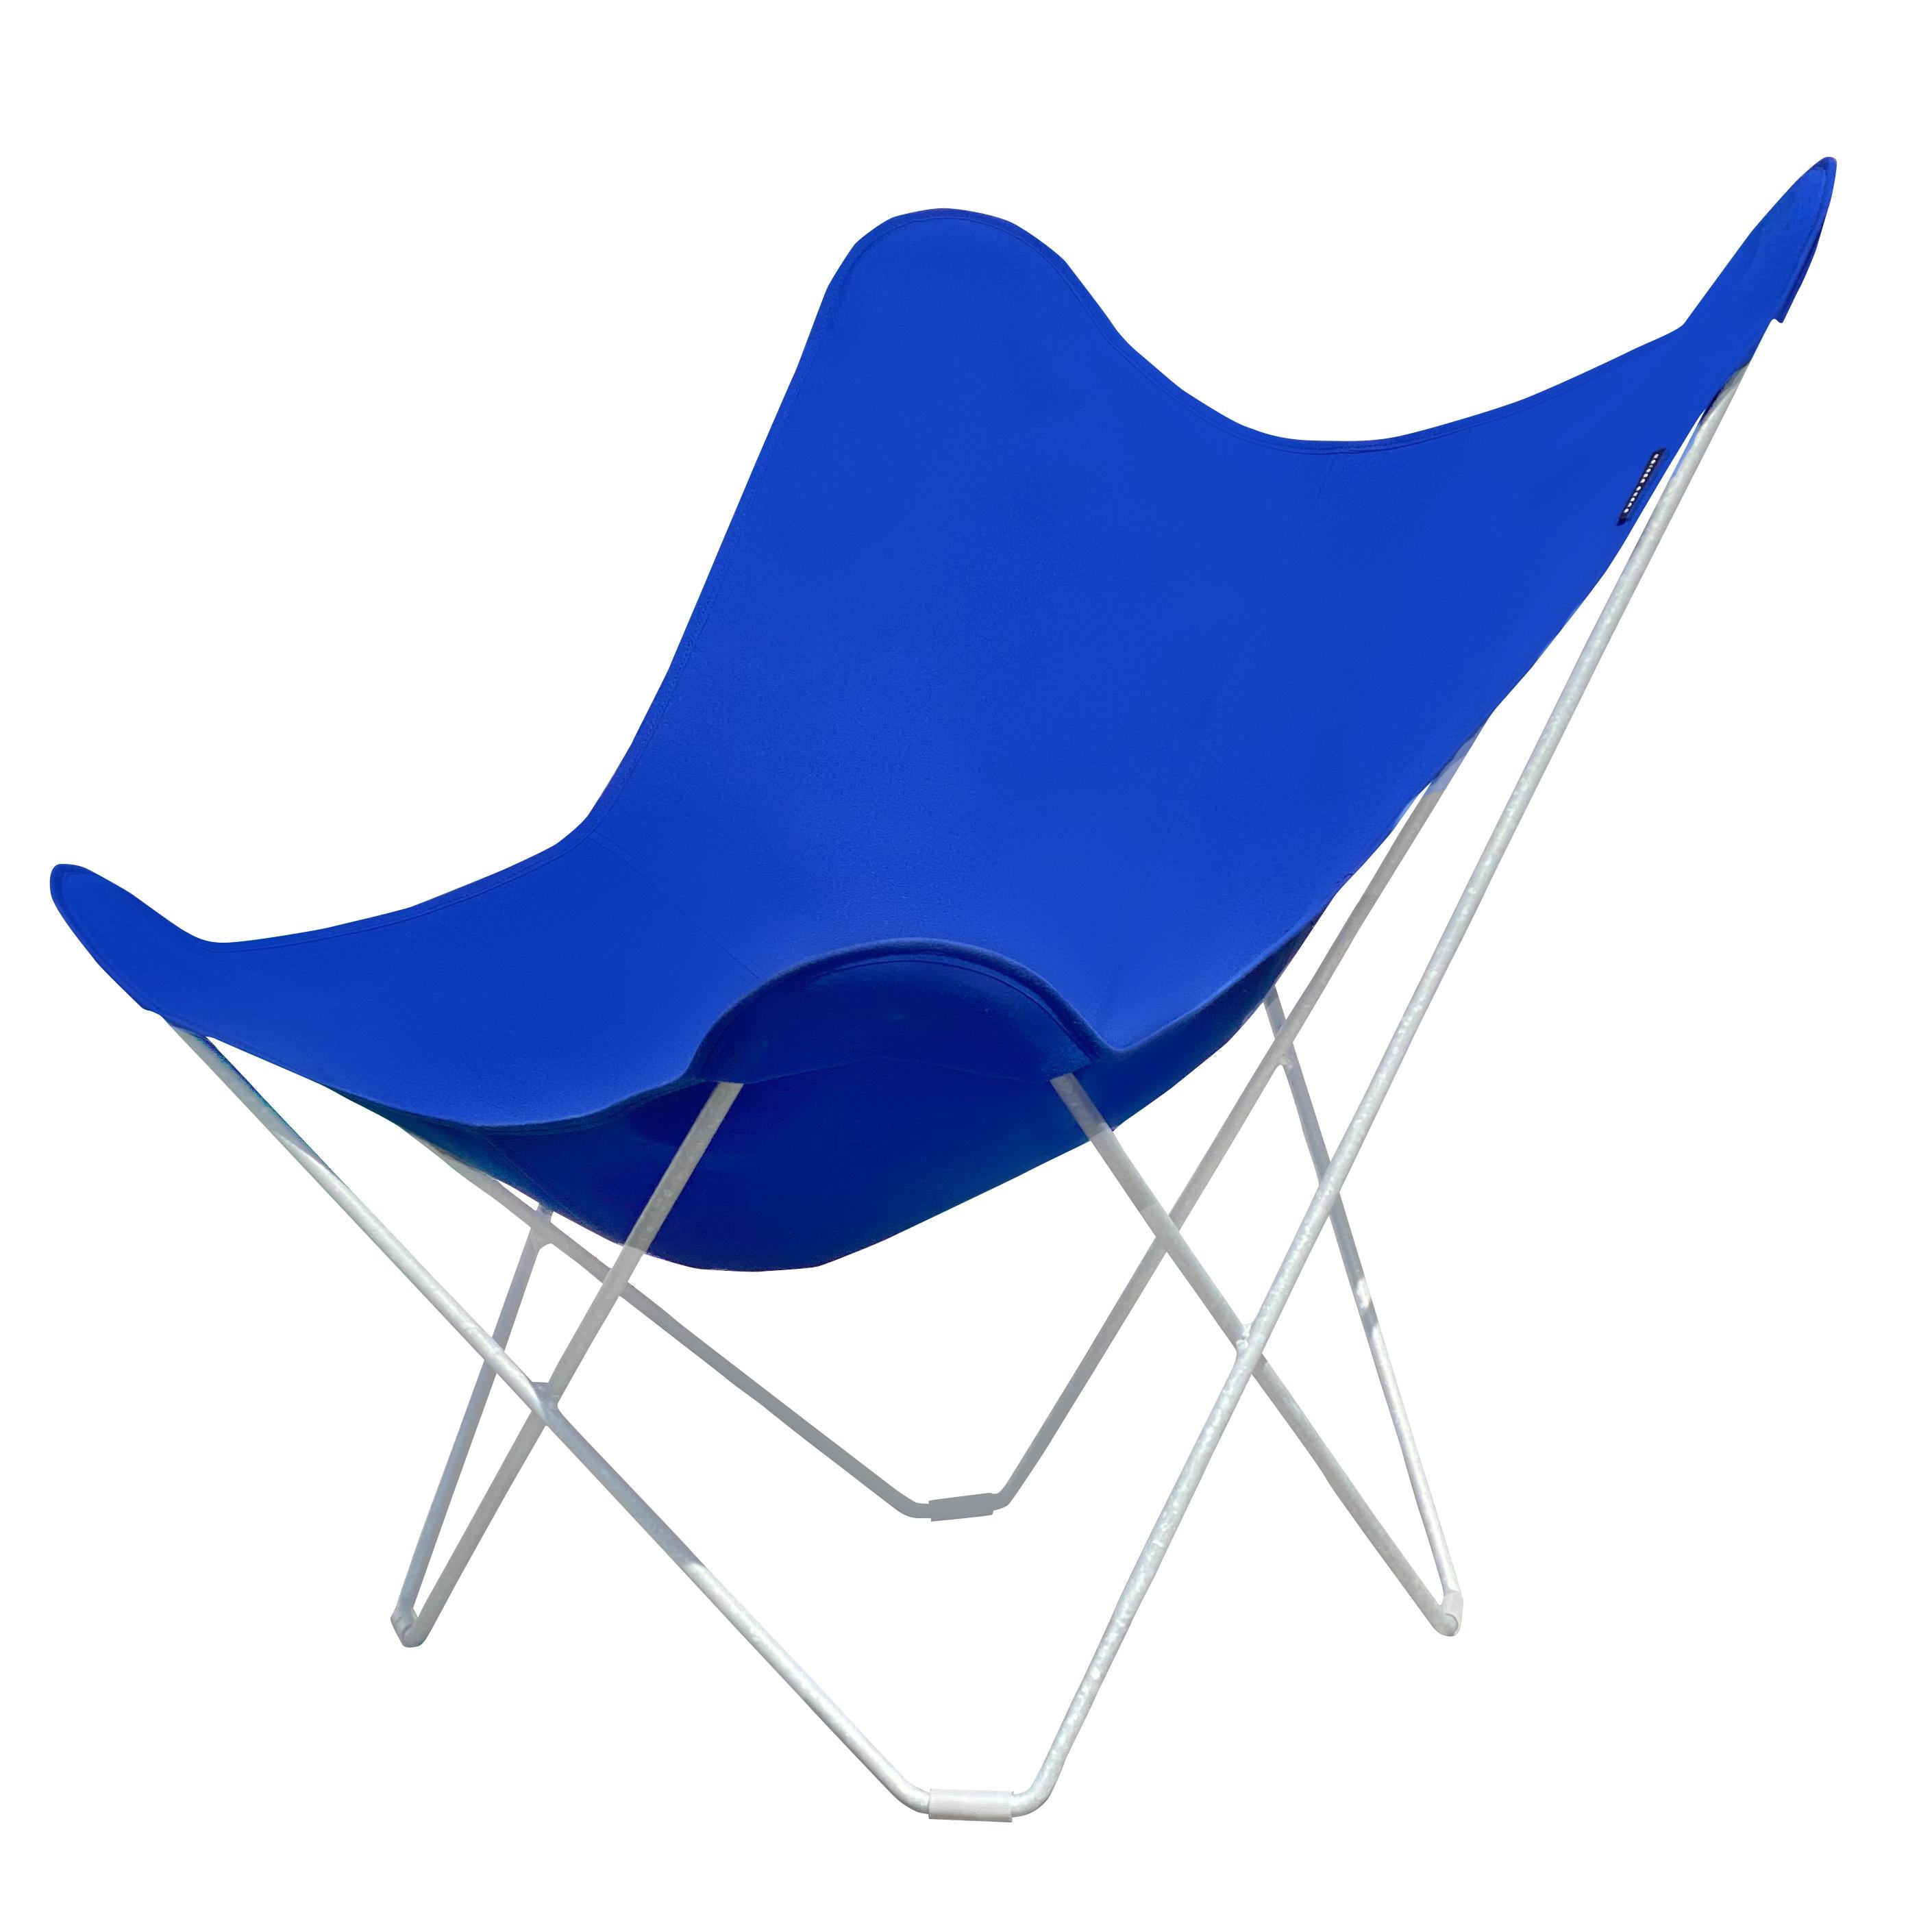 Cuero Sunshine Mariposa Butterfly Chair, Atlantic Blue/Grey Outdoor Frame